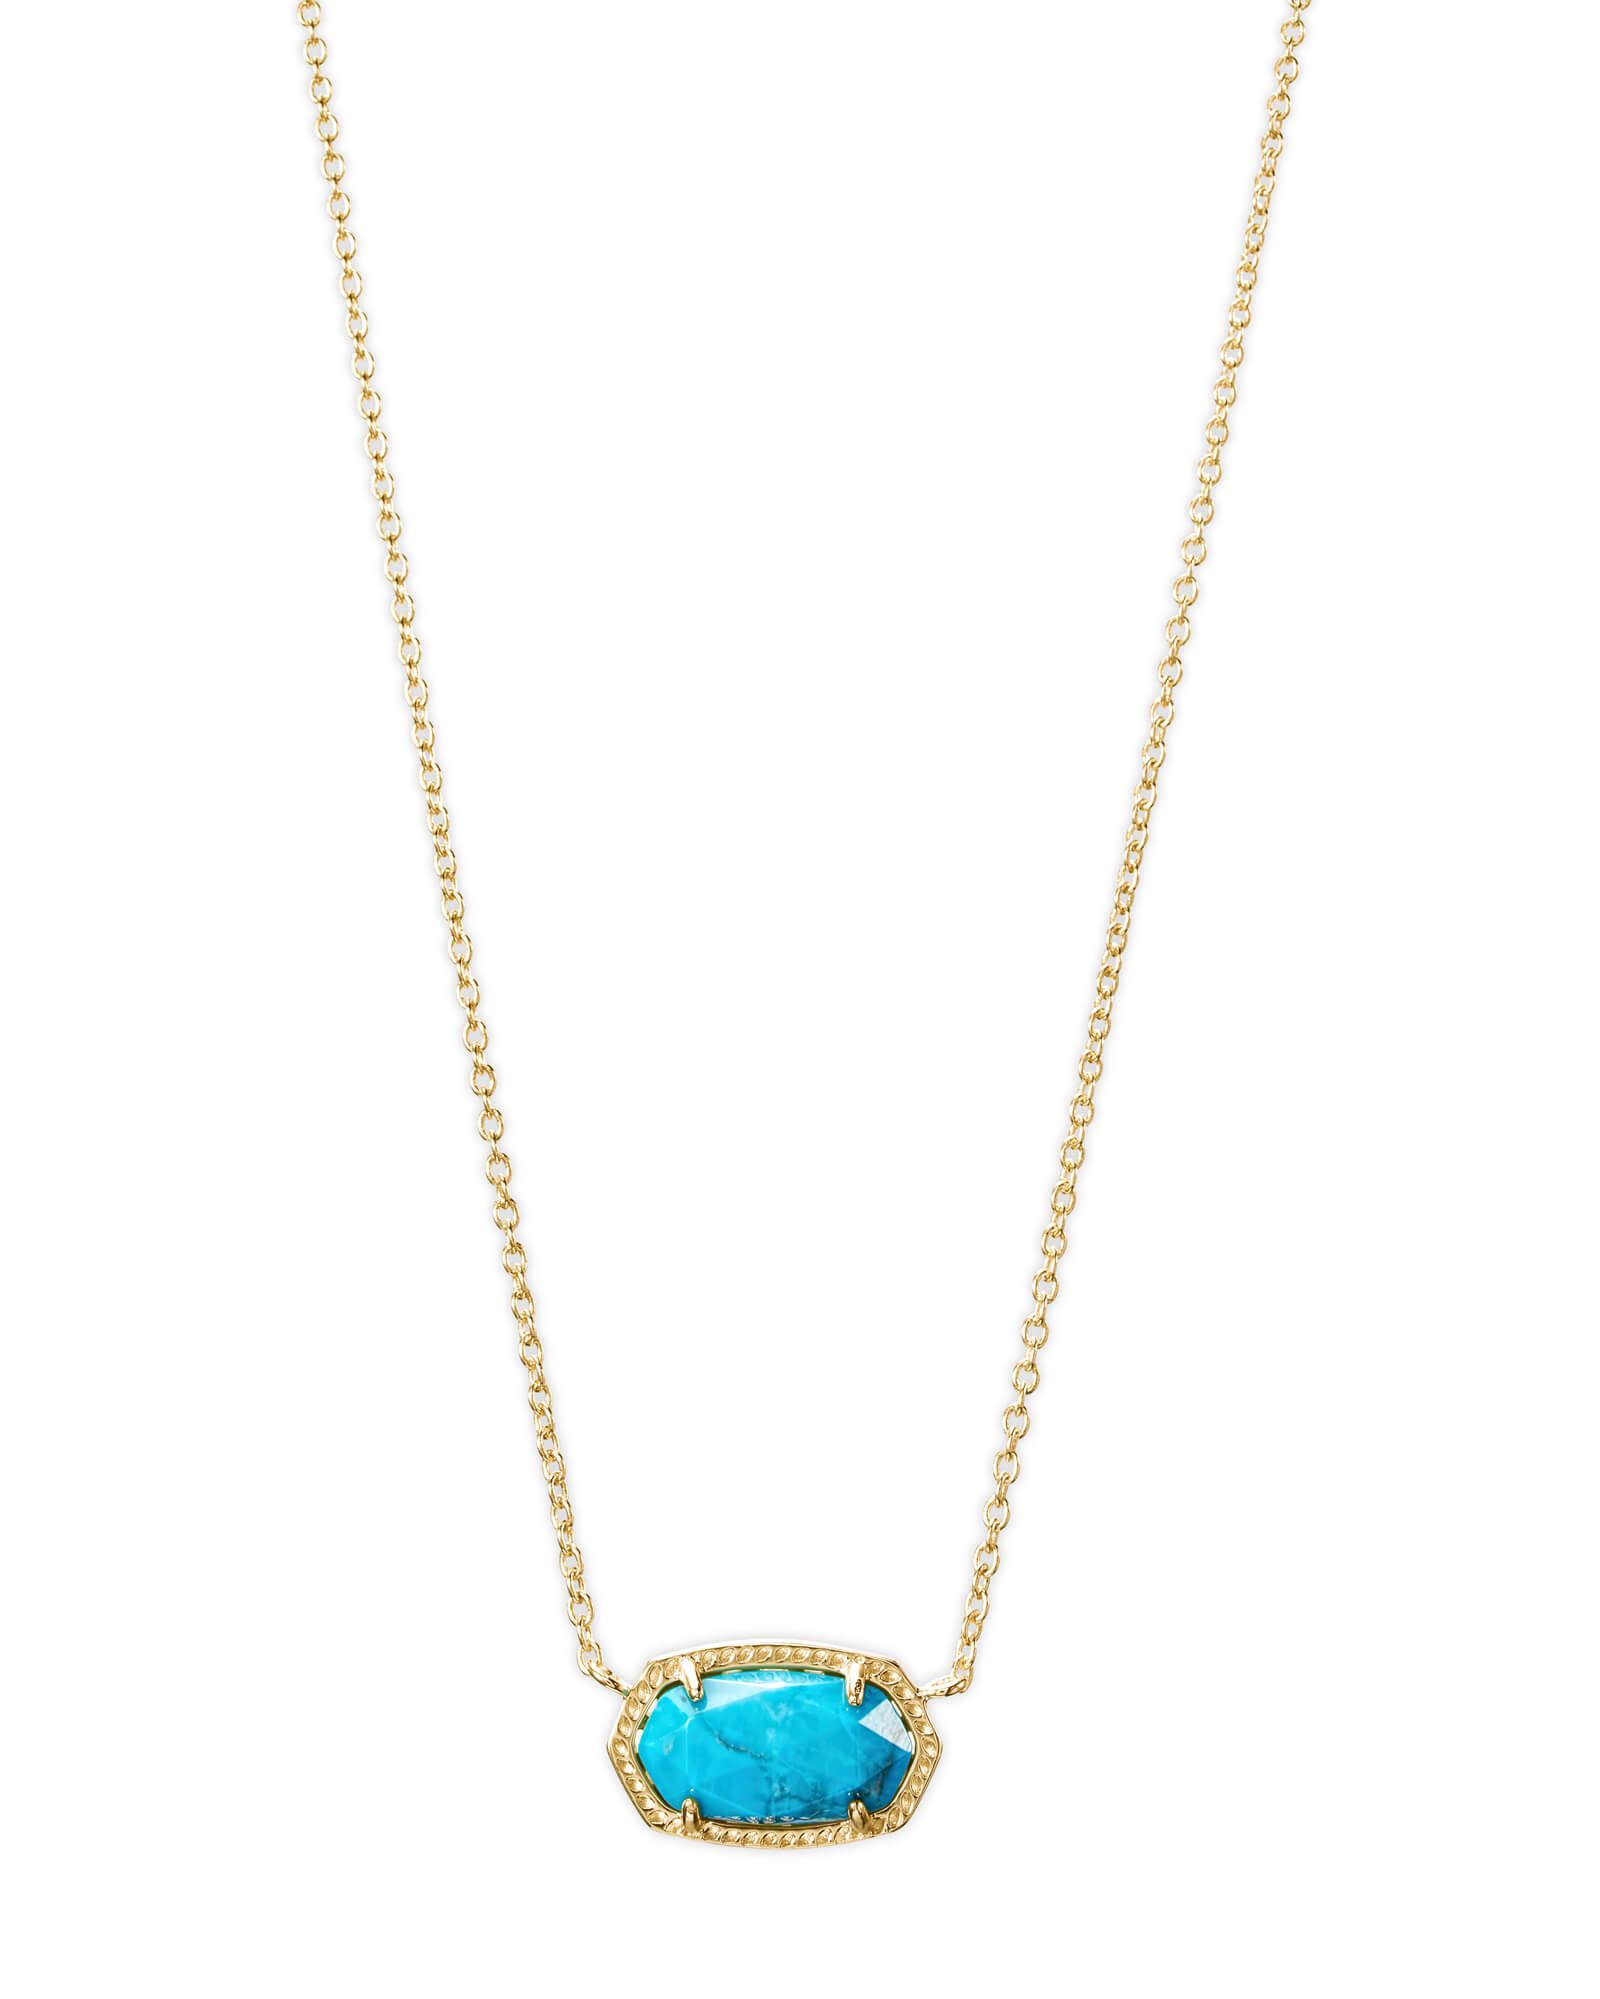 Elisa Gold Pendant Necklace in Aqua Howlite | Kendra Scott